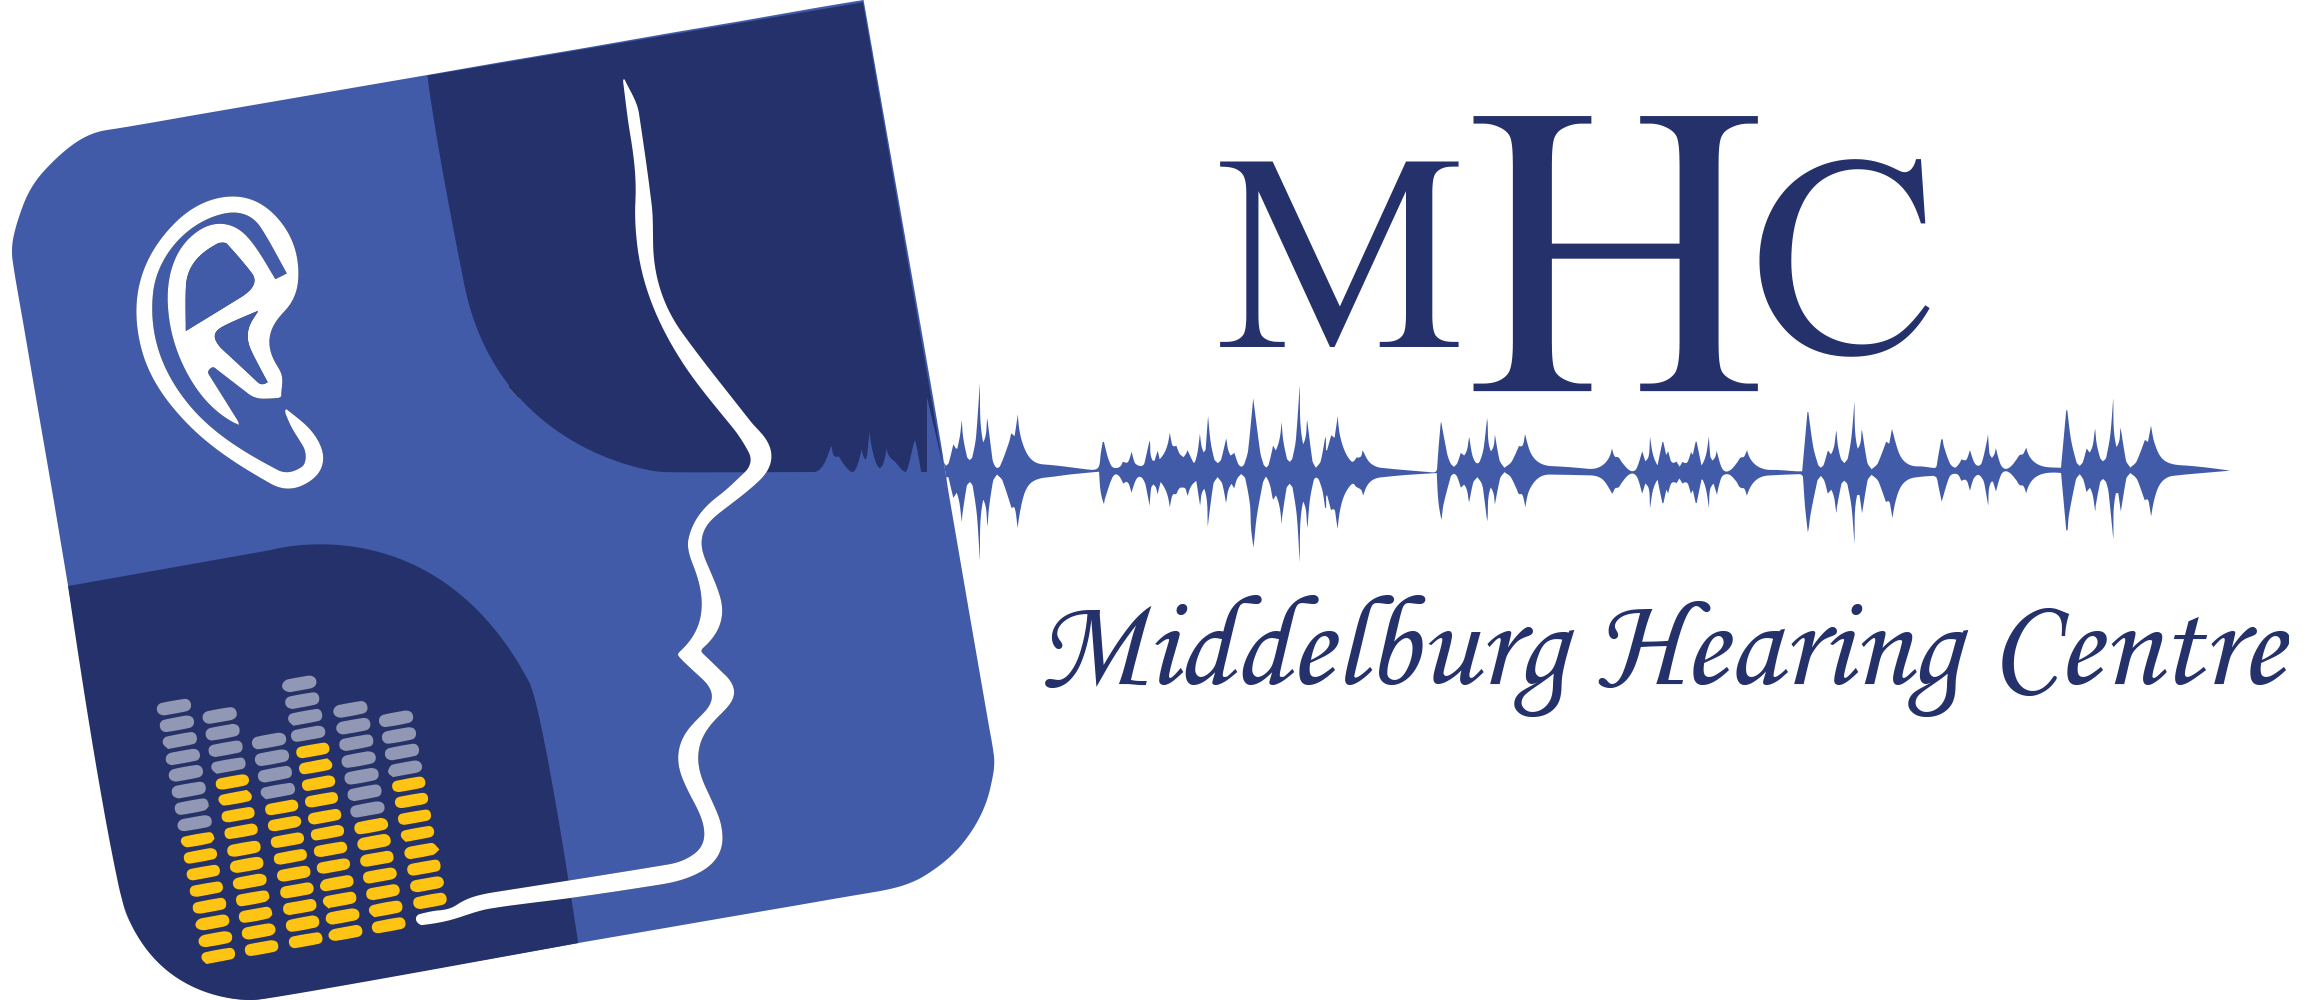 Peri Peri Creative-Middelburg Hearing Centre-Logo